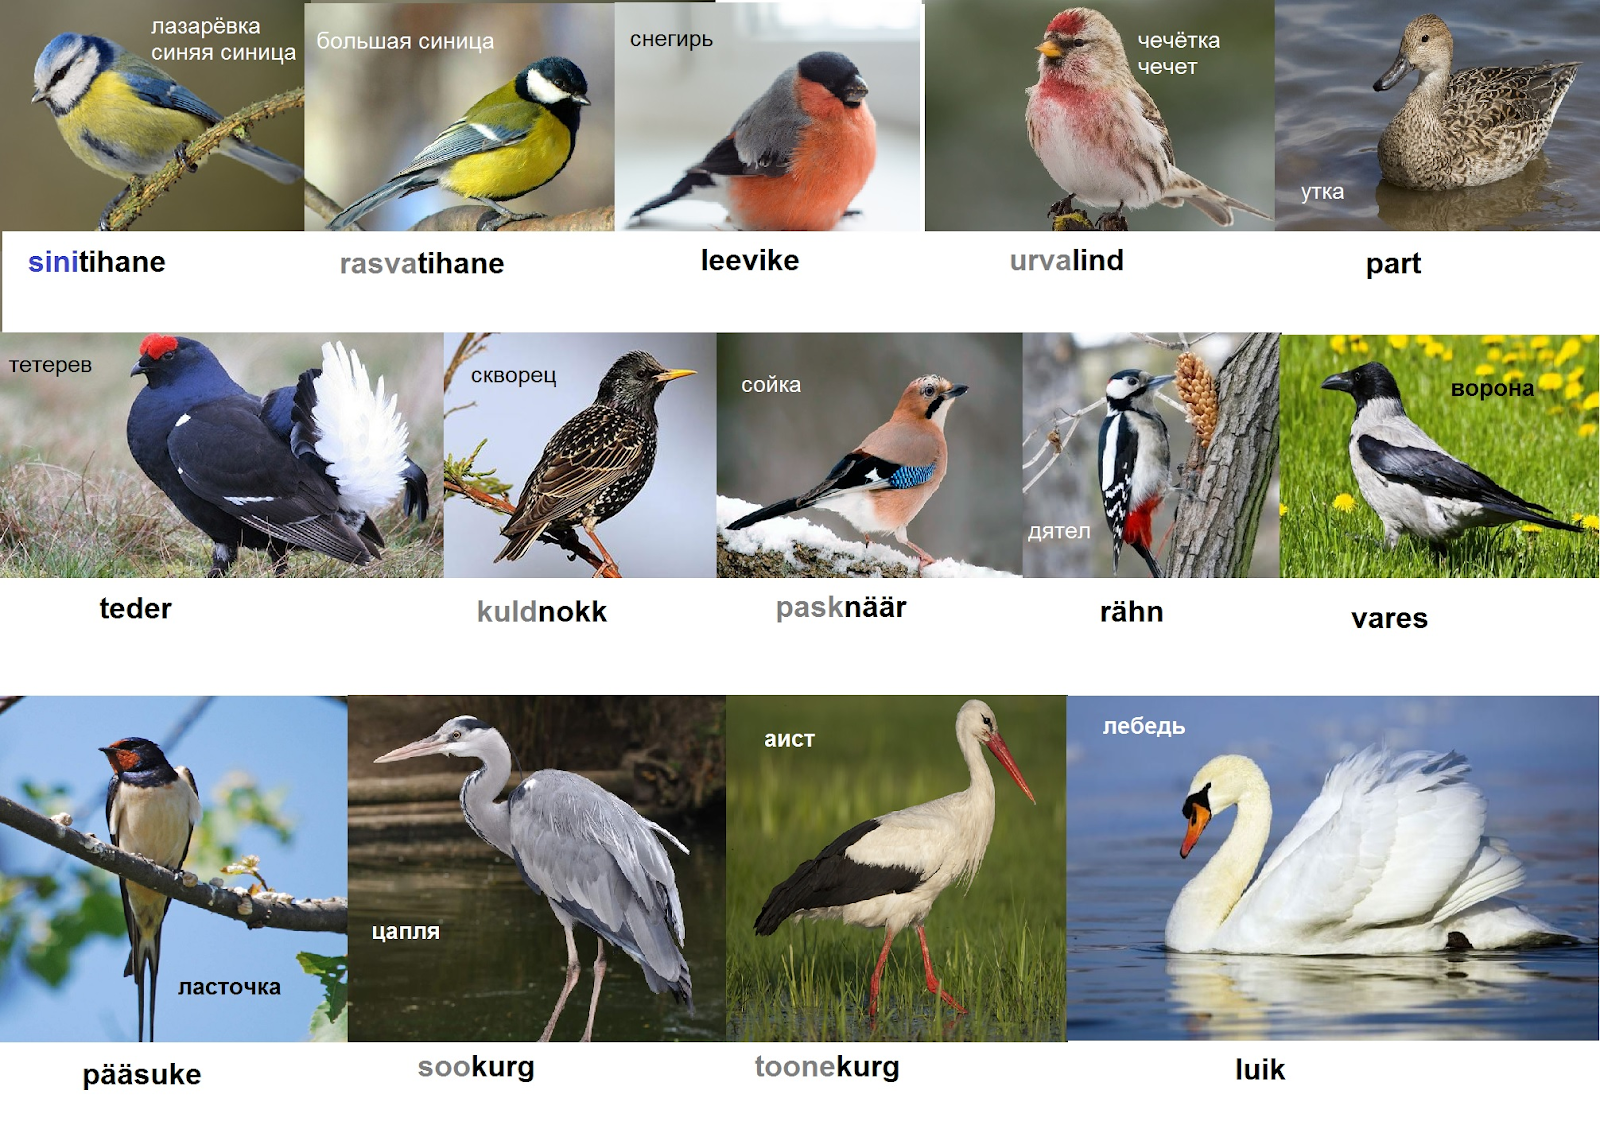 Название птиц. Птицы всех видов. Птицы список названий. Птици наз. Разновидности птиц названия